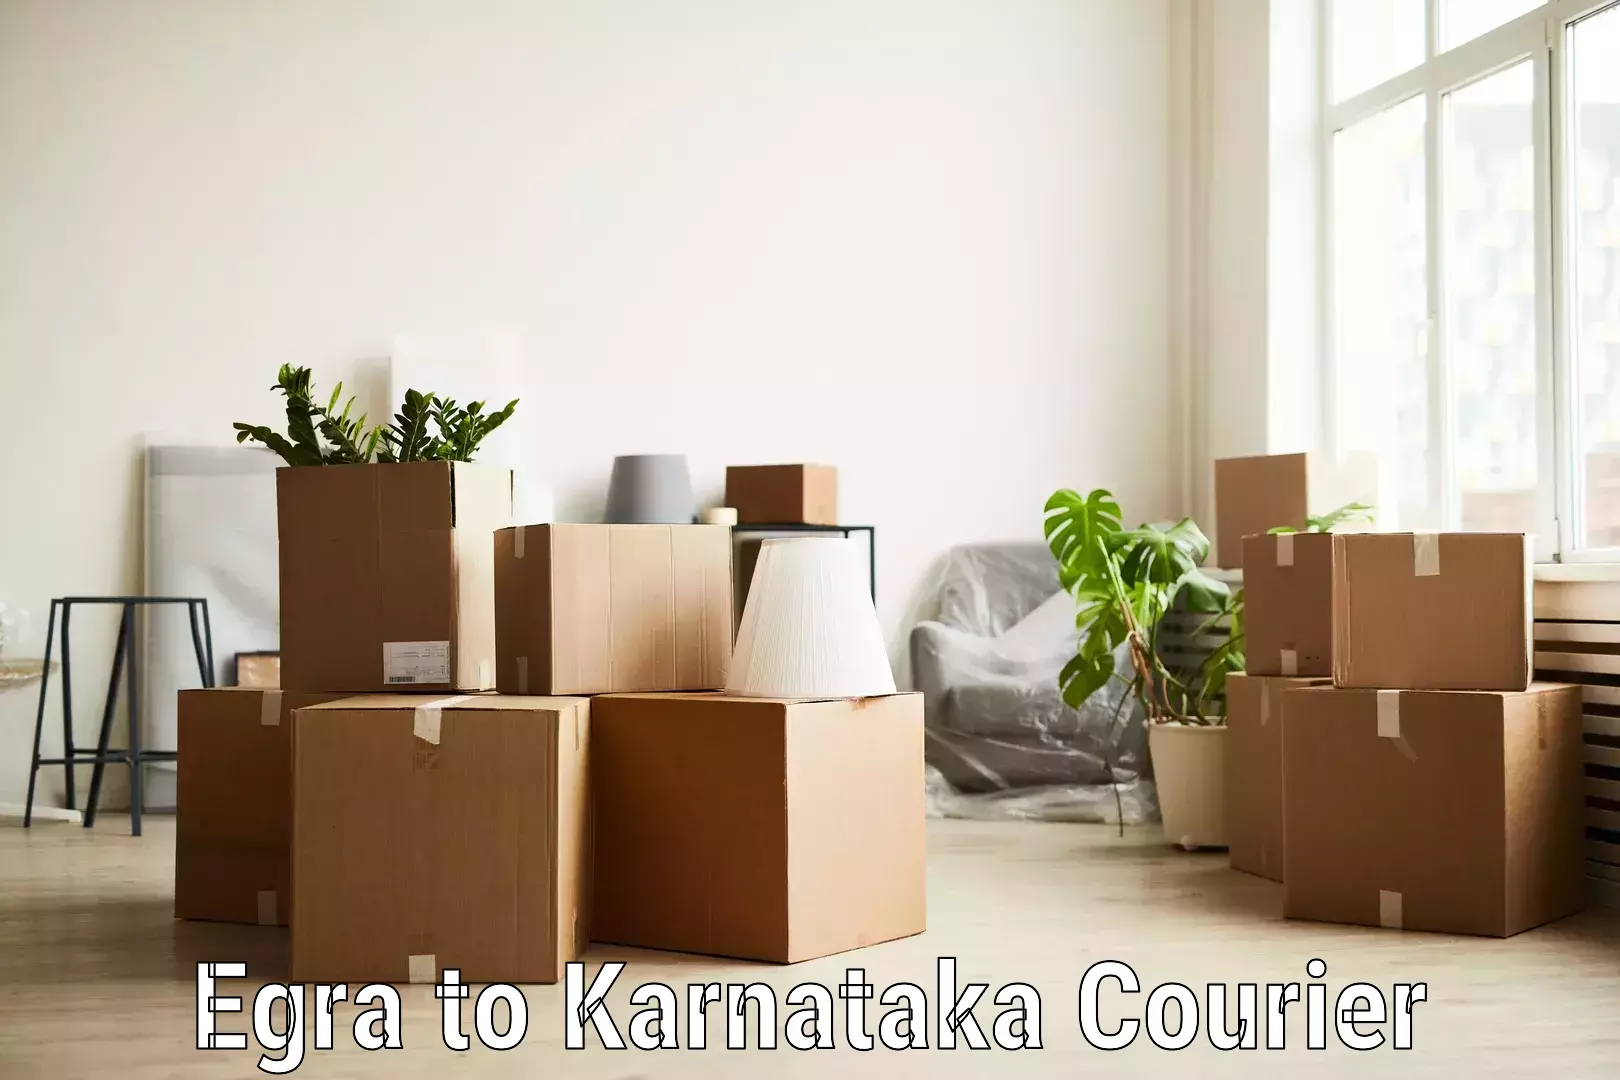 Local delivery service Egra to Karnataka